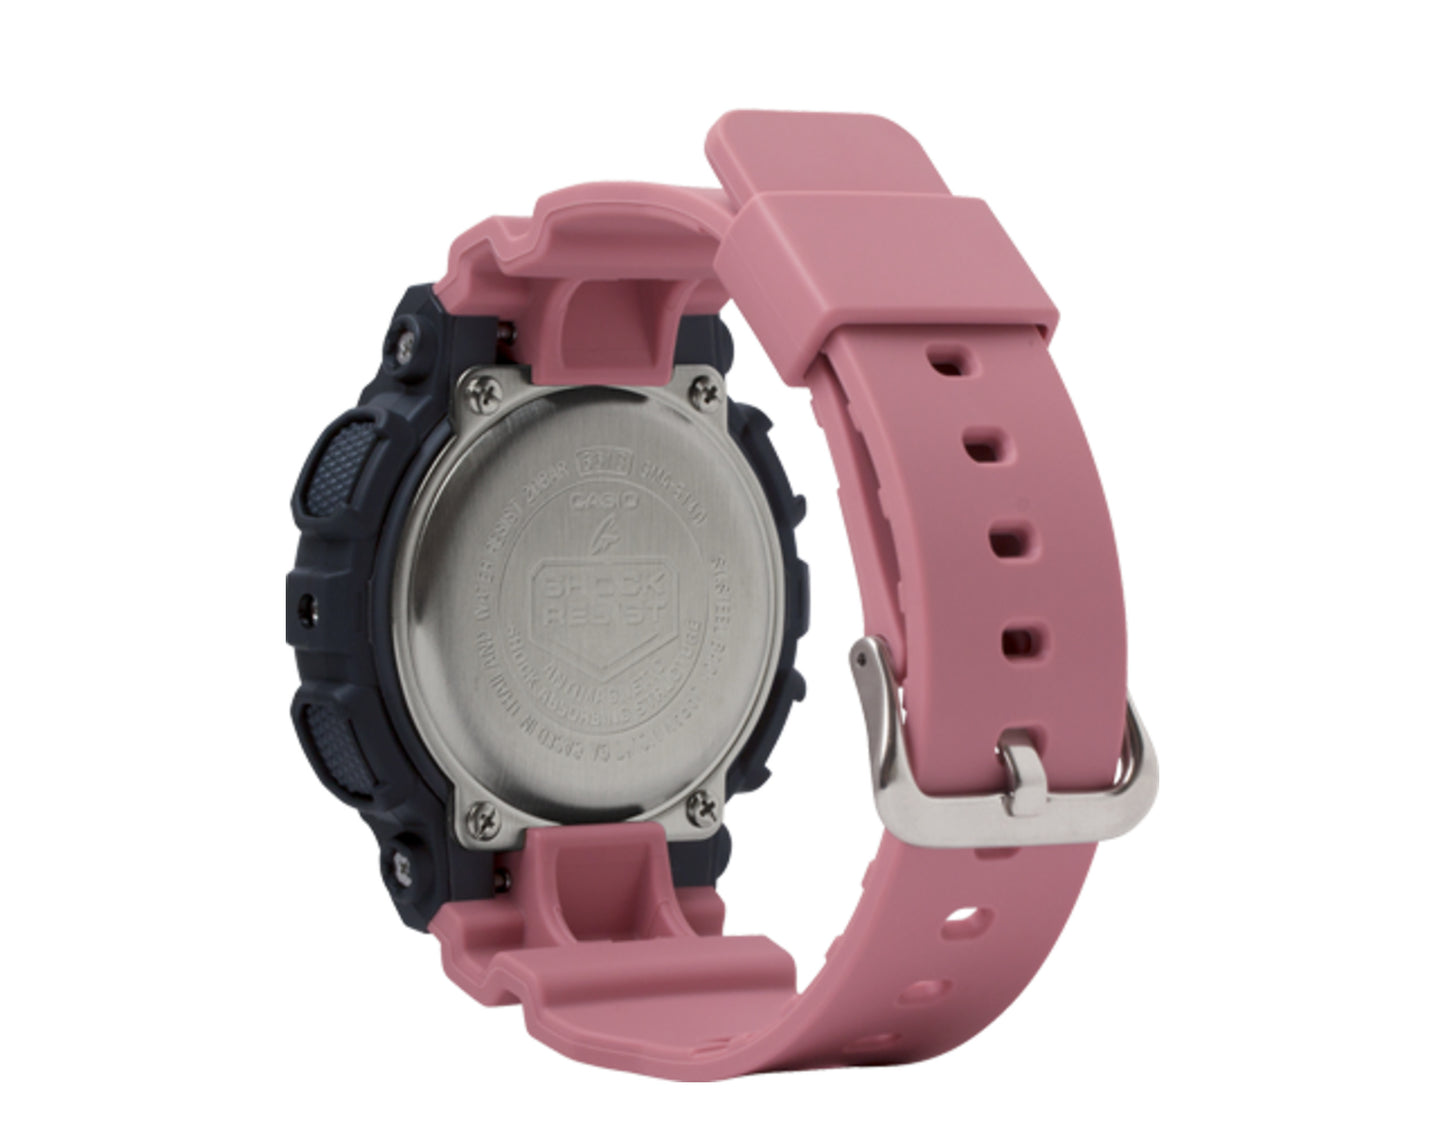 Casio G-Shock GMAS140 S Series Analog-Digital Resin Black/Pink Women's Watch GMAS140-4A